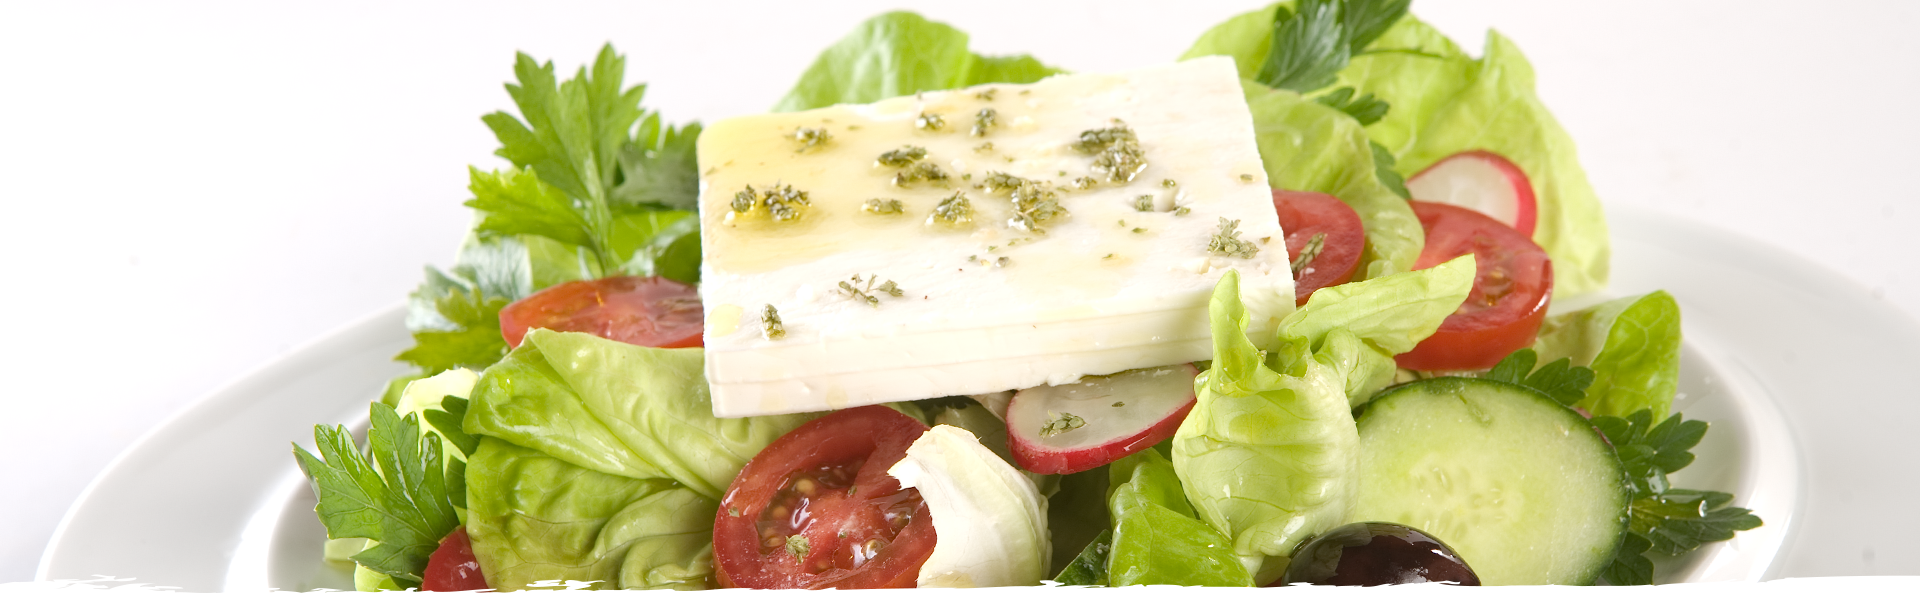 Salad cheese KOLIOS S A Greek Dairy